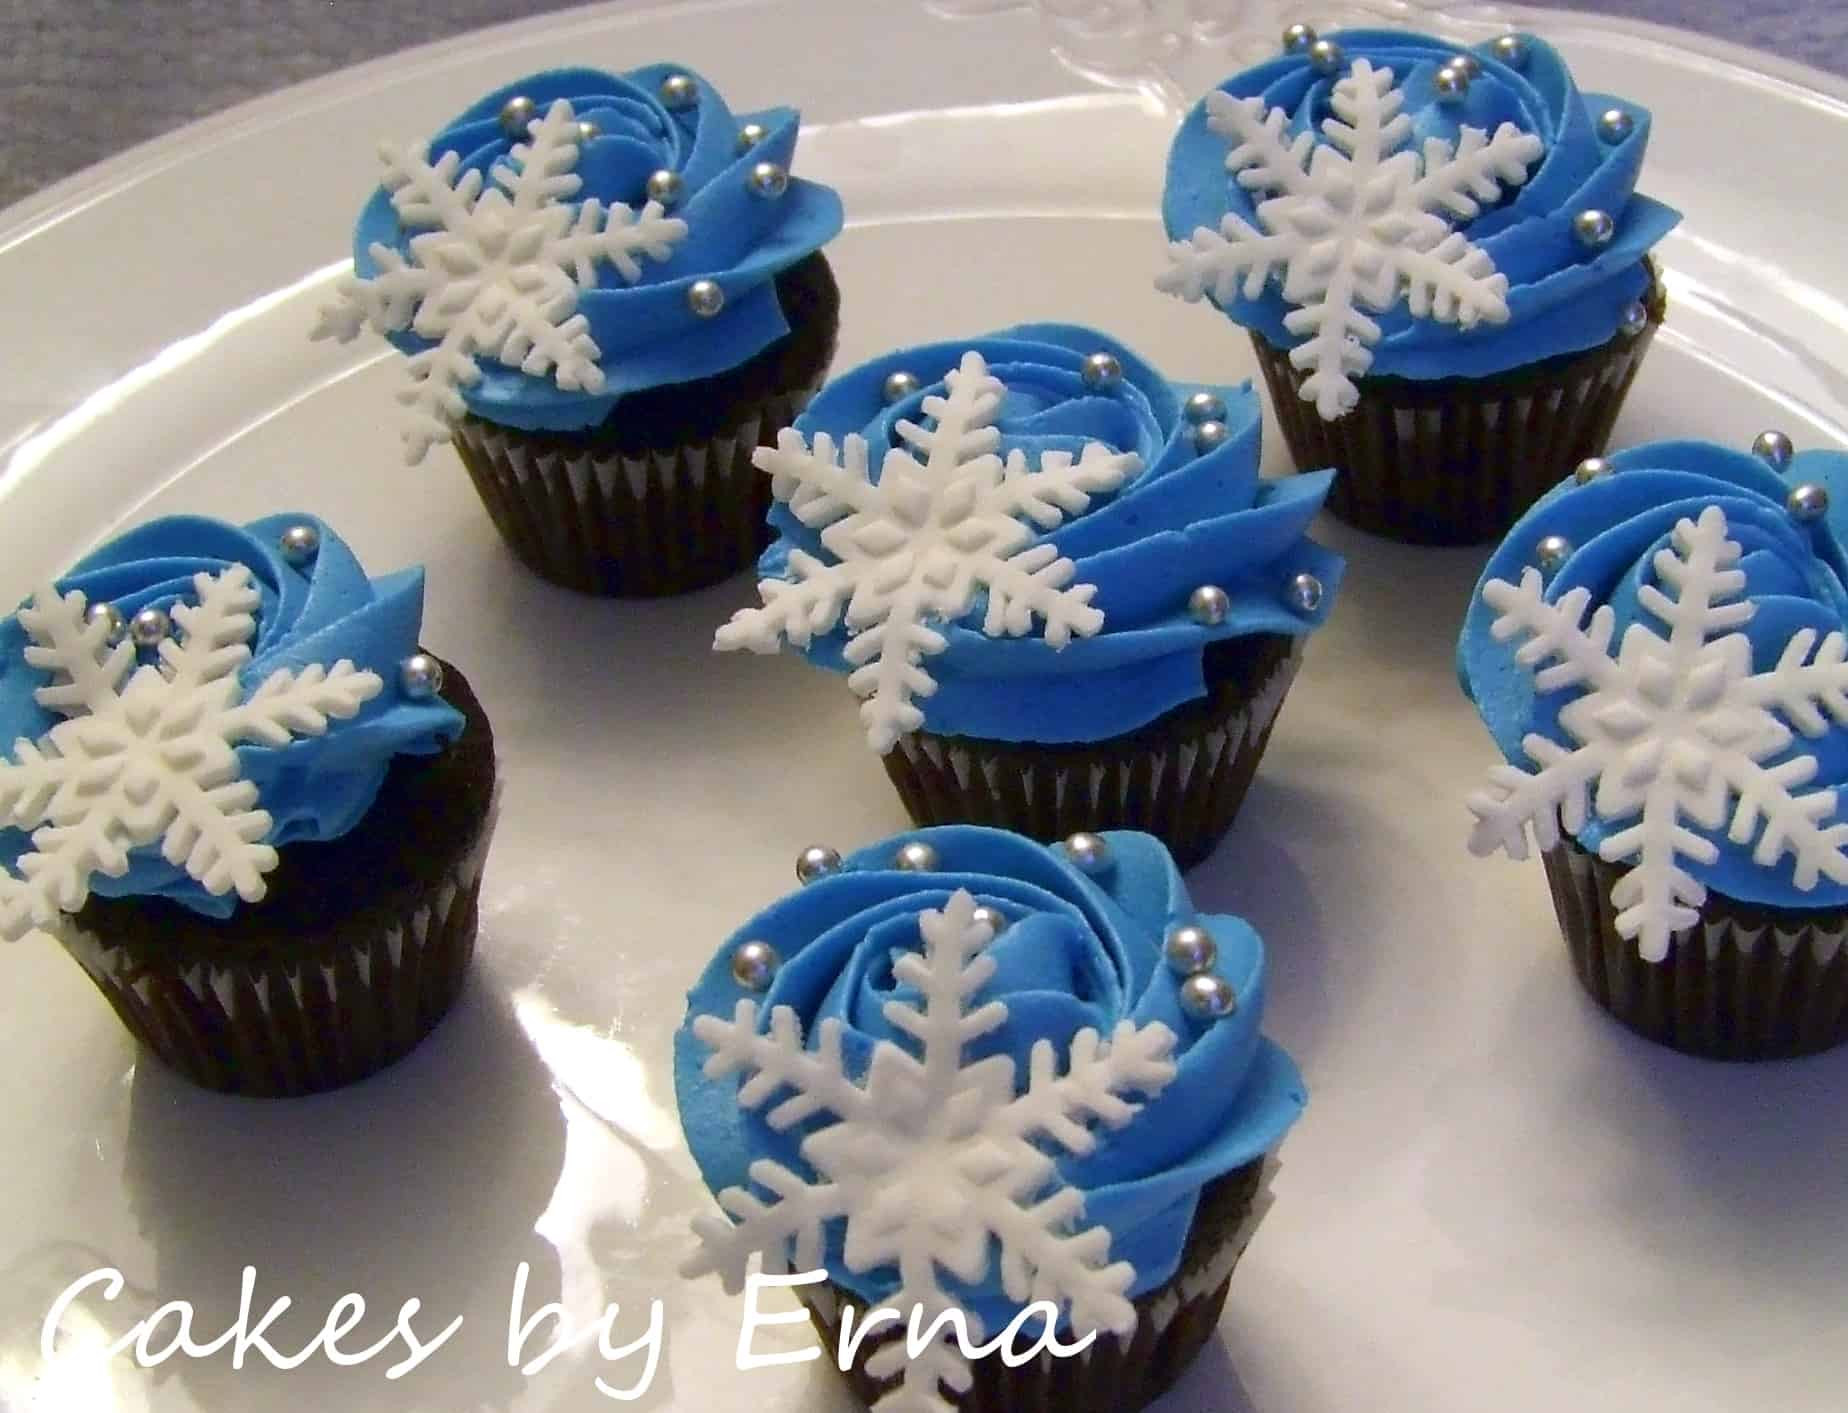 Winter Wonderland Cupcakes
 Winter Wonderland Cupcakes CakesbyErna